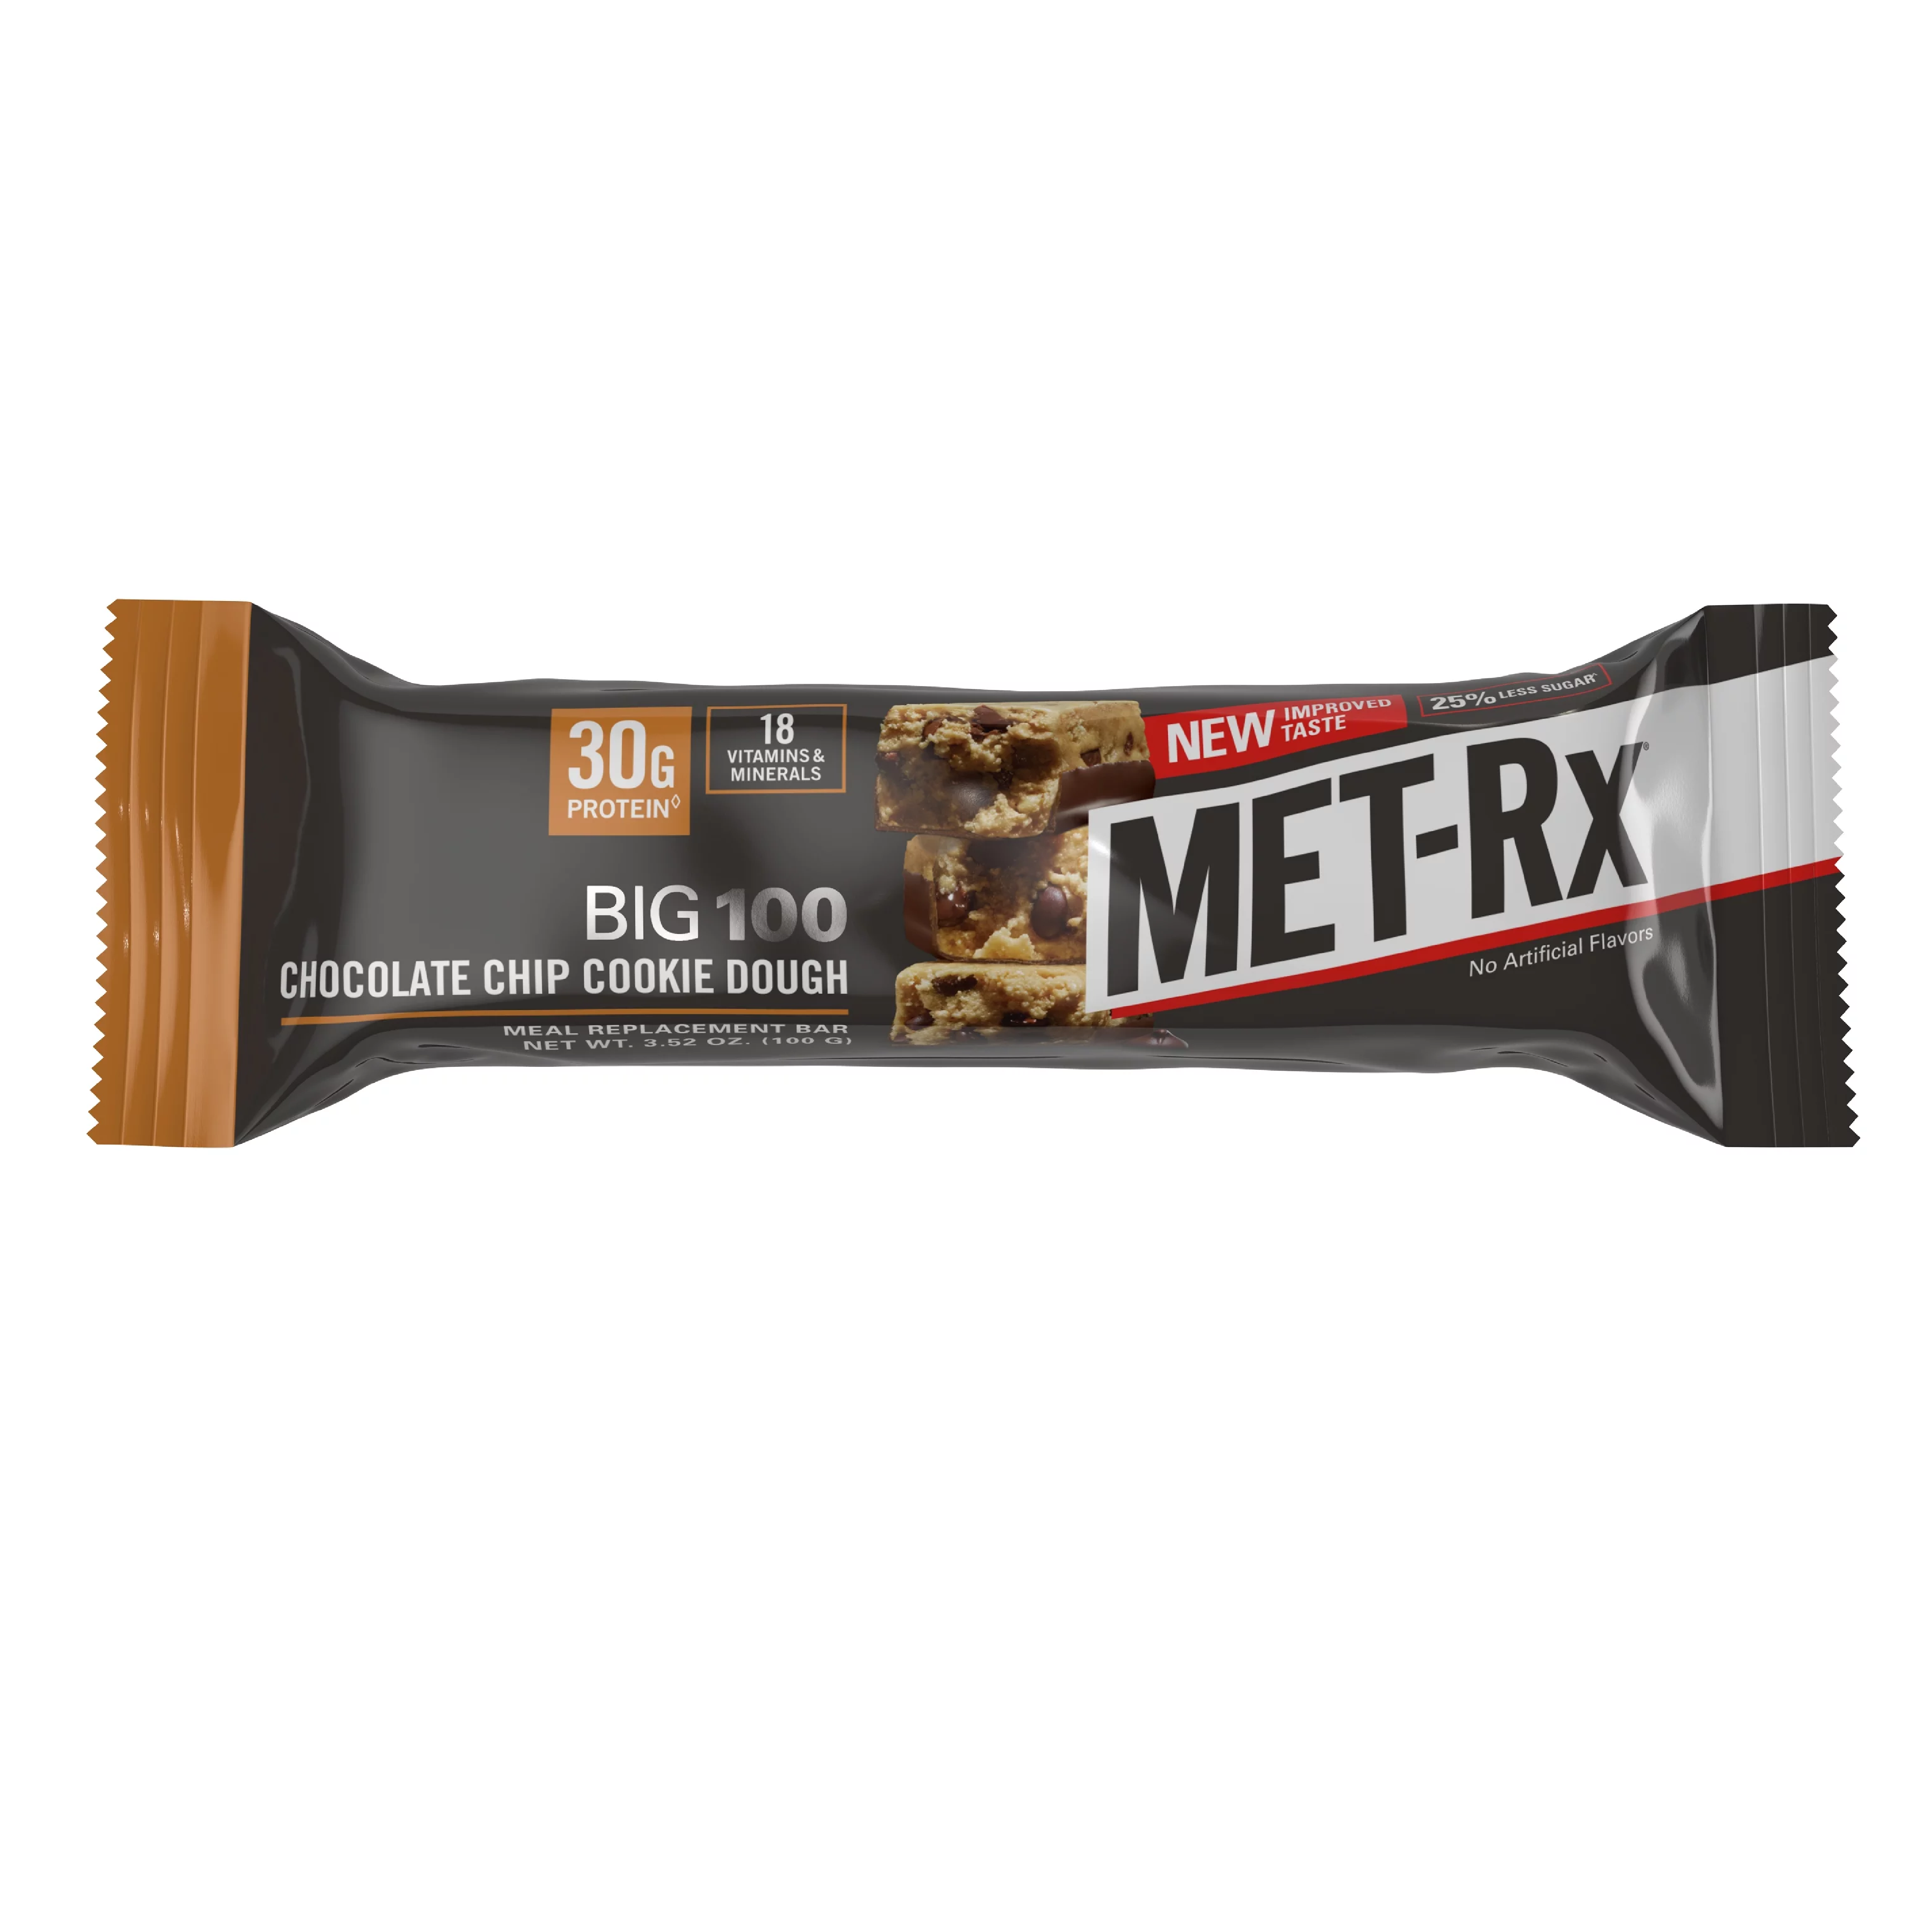 MET-Rx Big 100 Chocolate Chip Cookie Dough Protein Bar 3.52oz